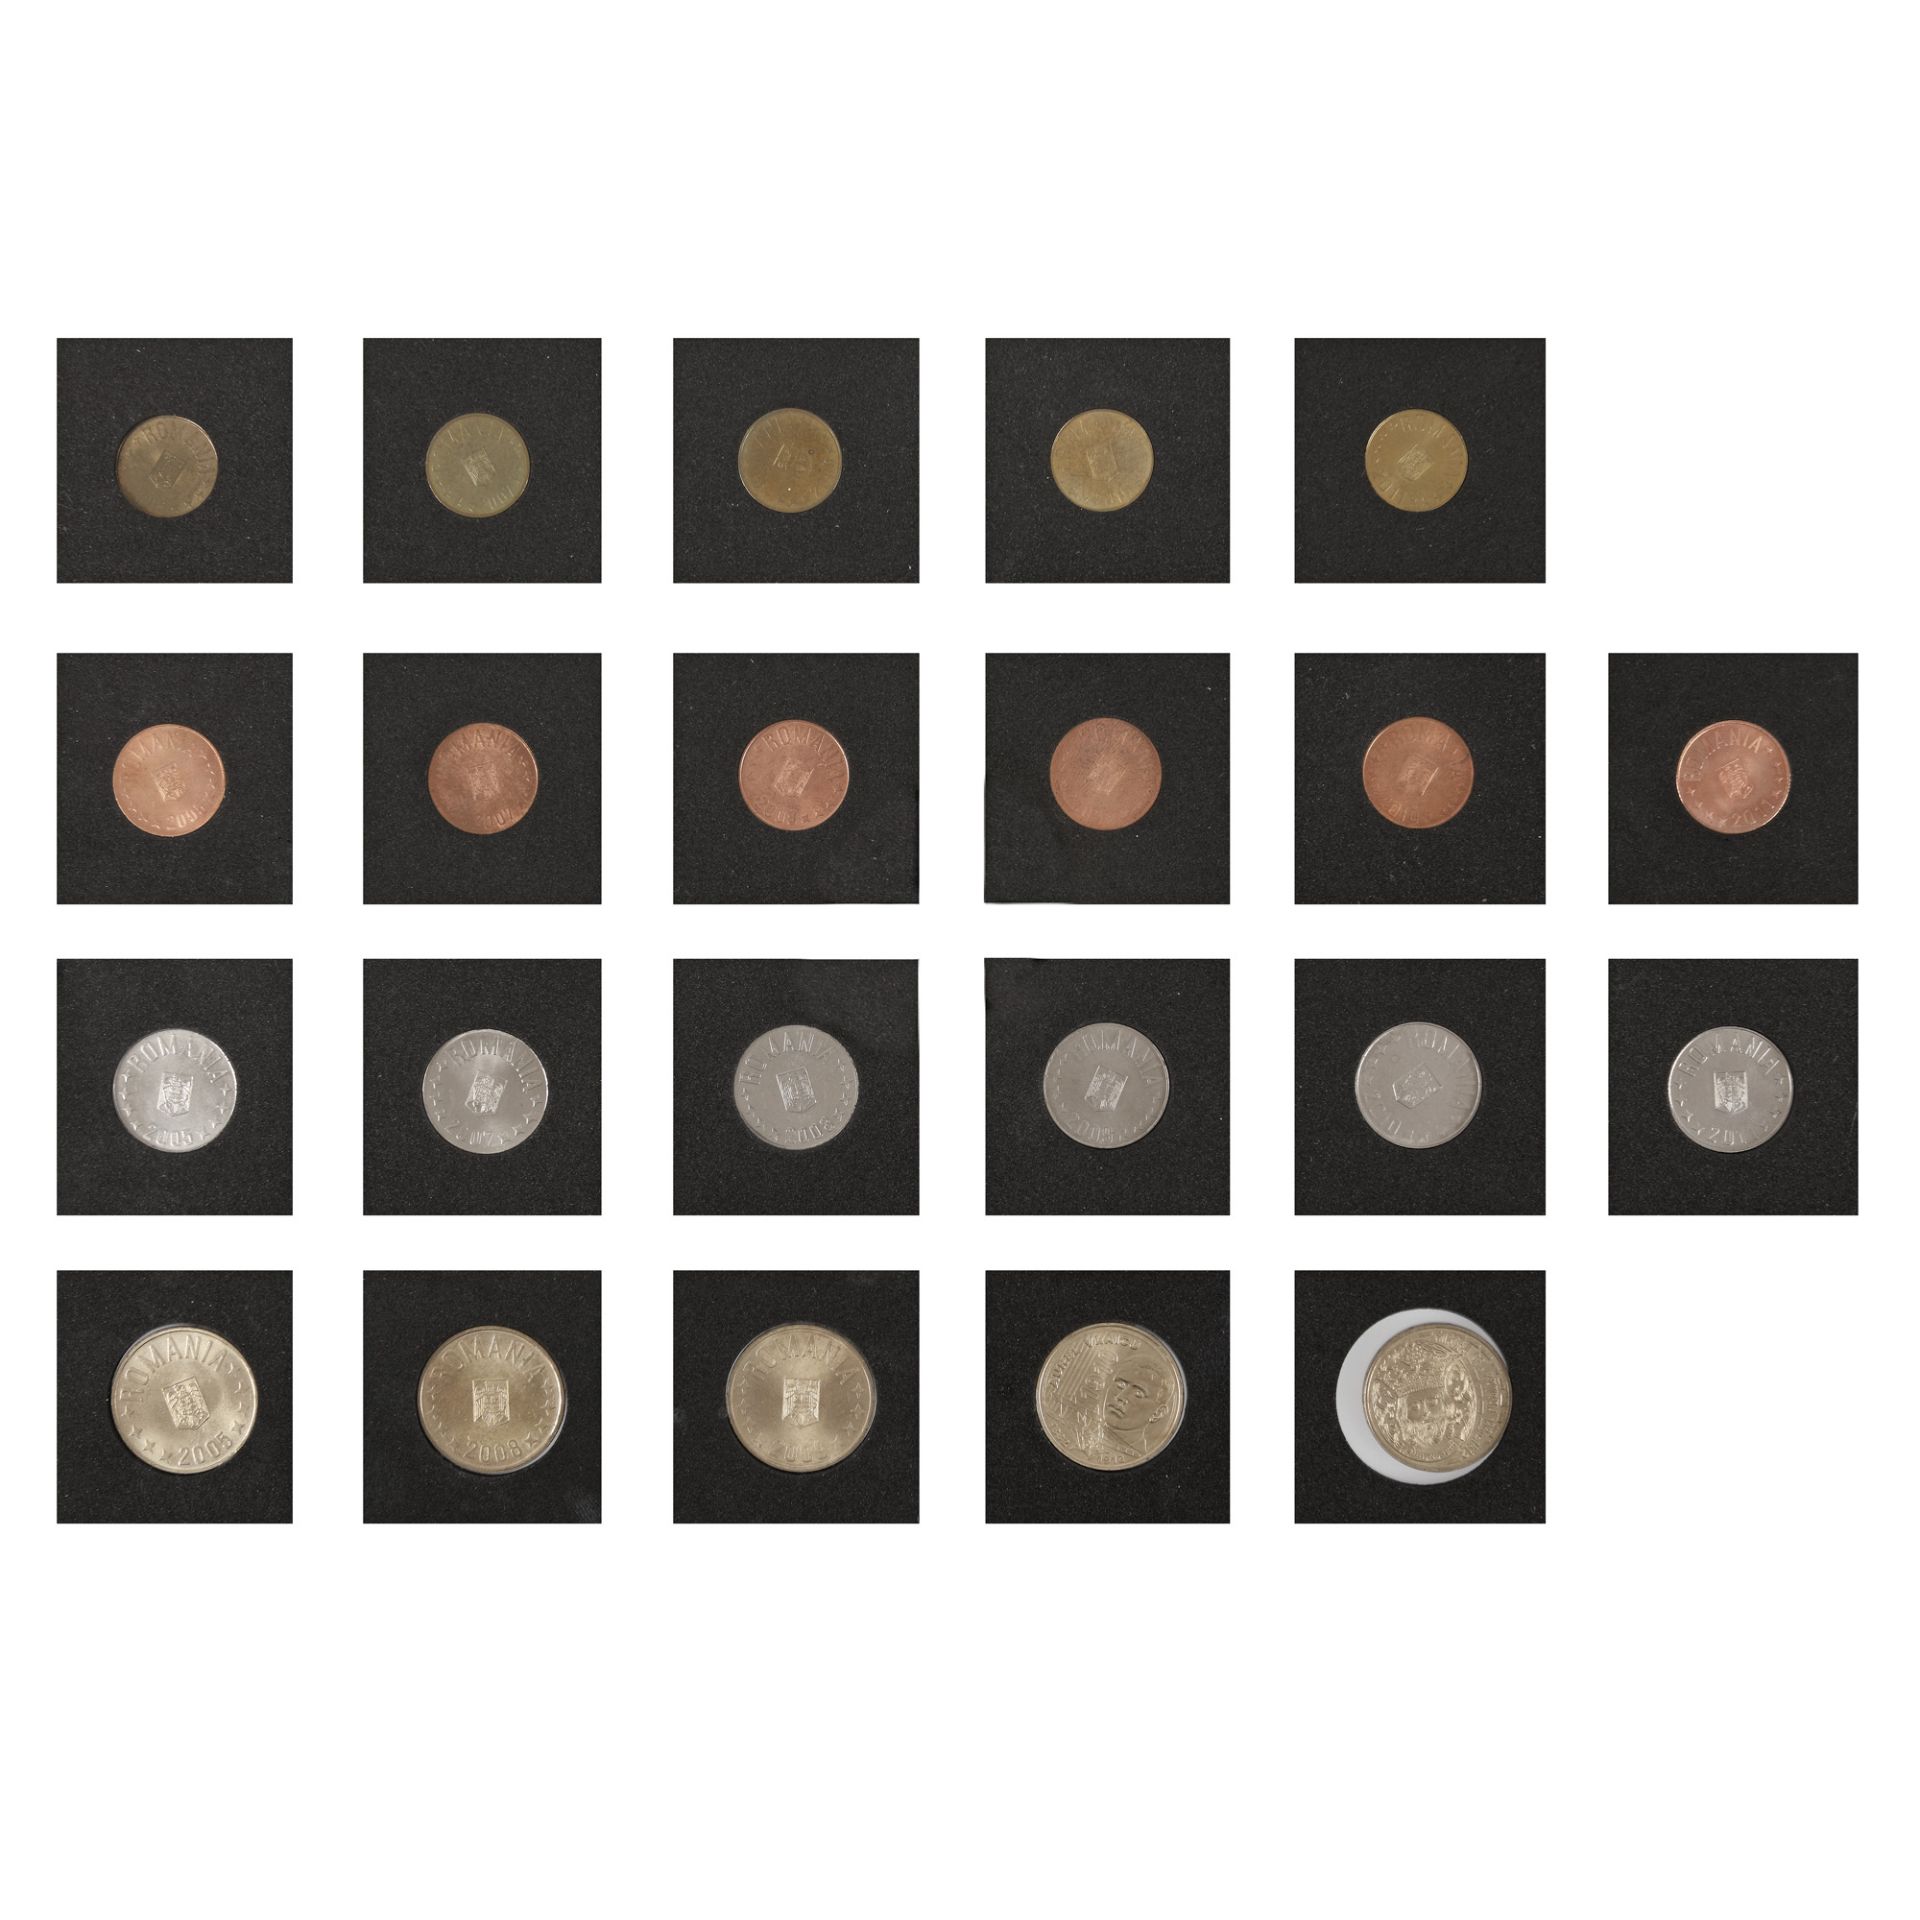 Lot consisting of twenty-two coins, 1 Ban, 5 Bani, 10 Bani, 50 Bani 2005, 1 Ban, 5 Bani, 10 Bani 200